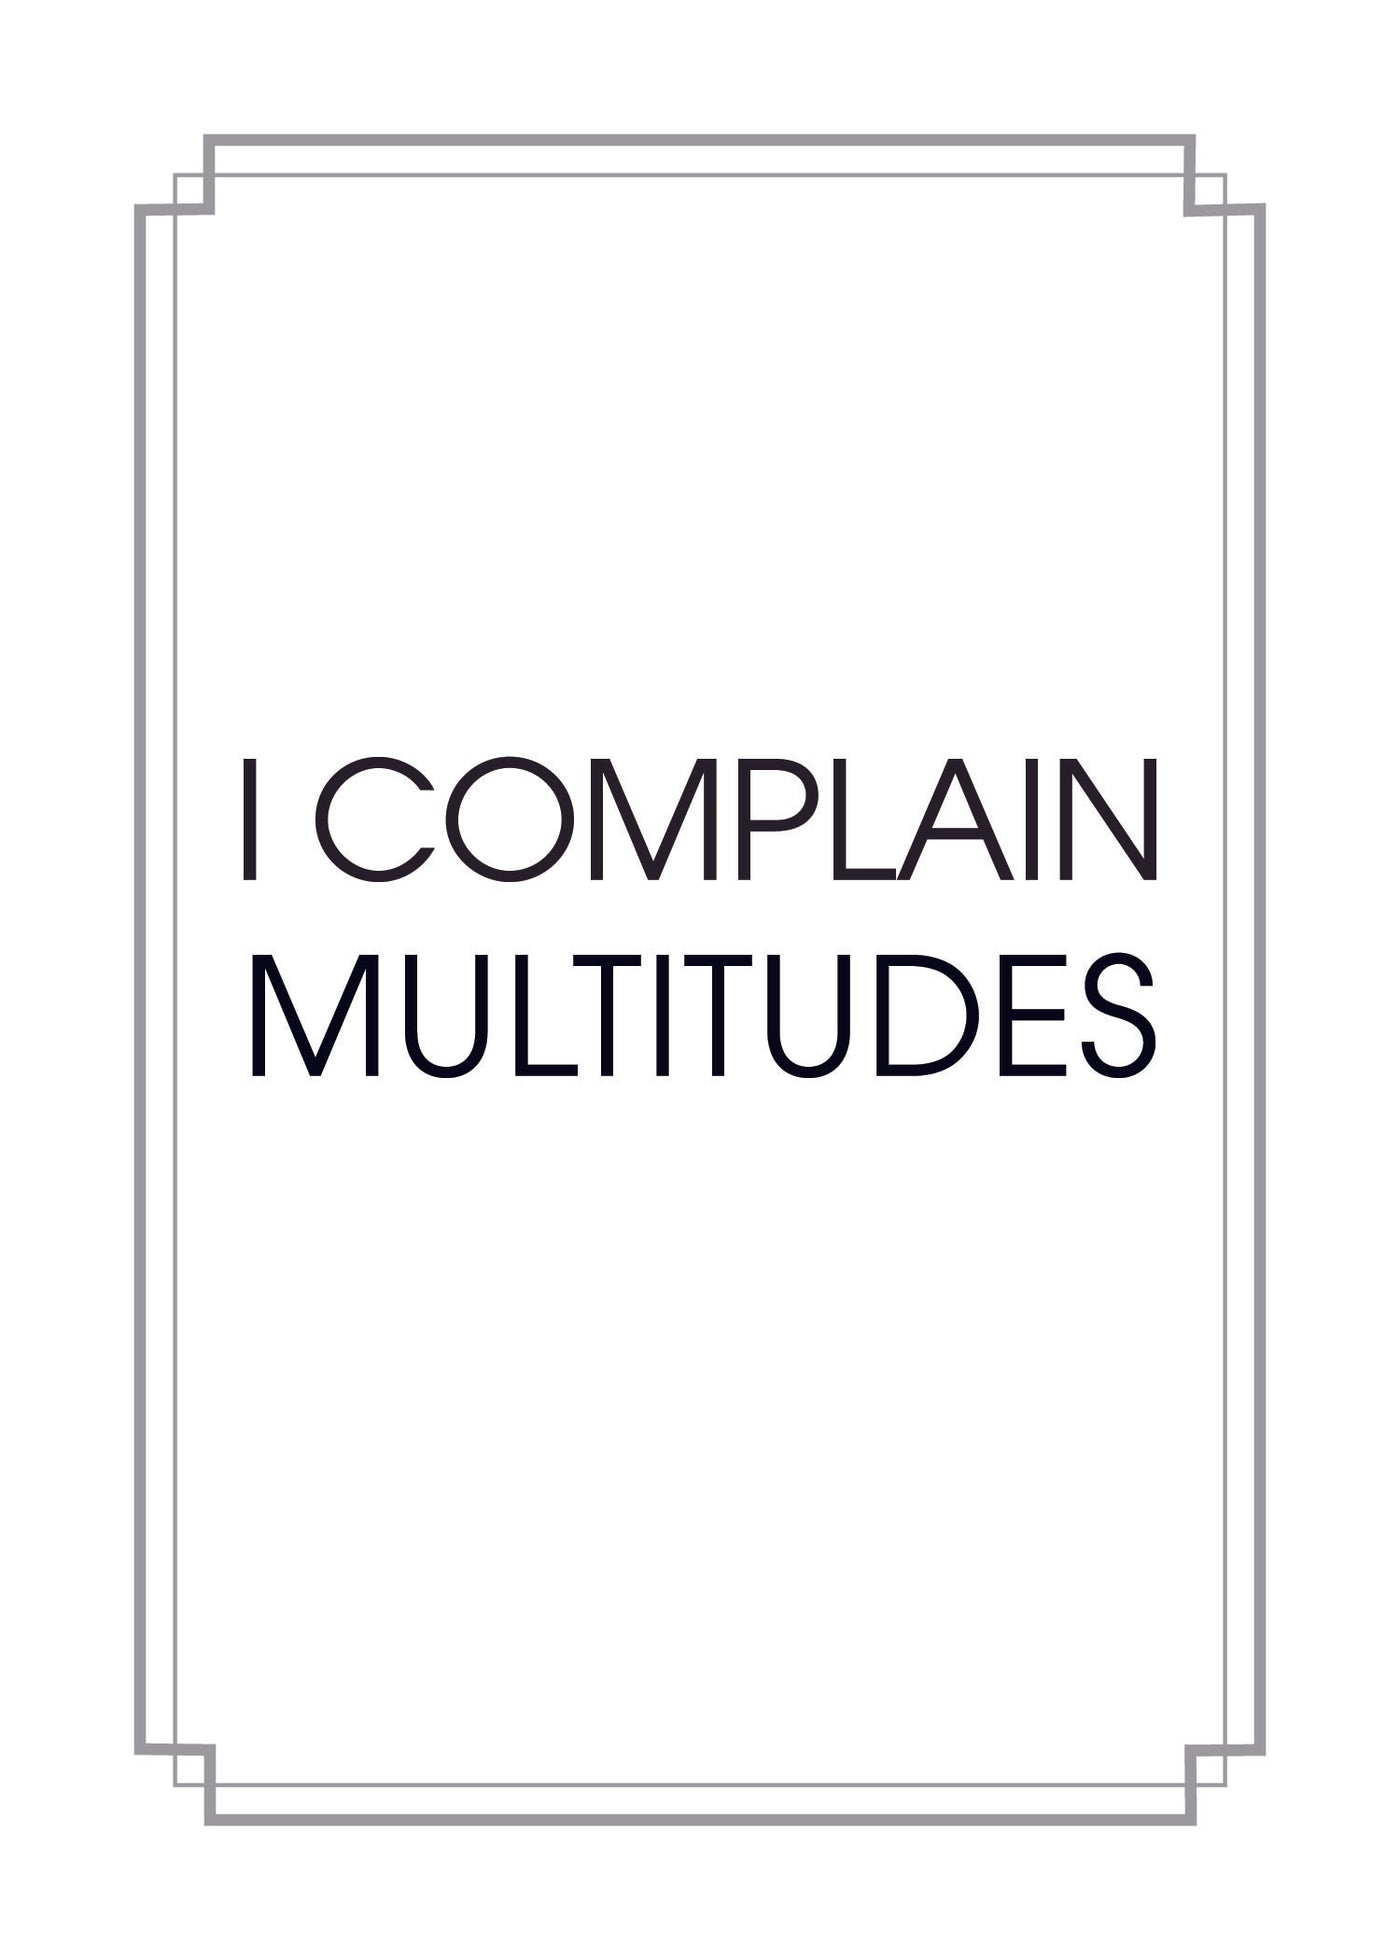 I Complain Multitudes Print